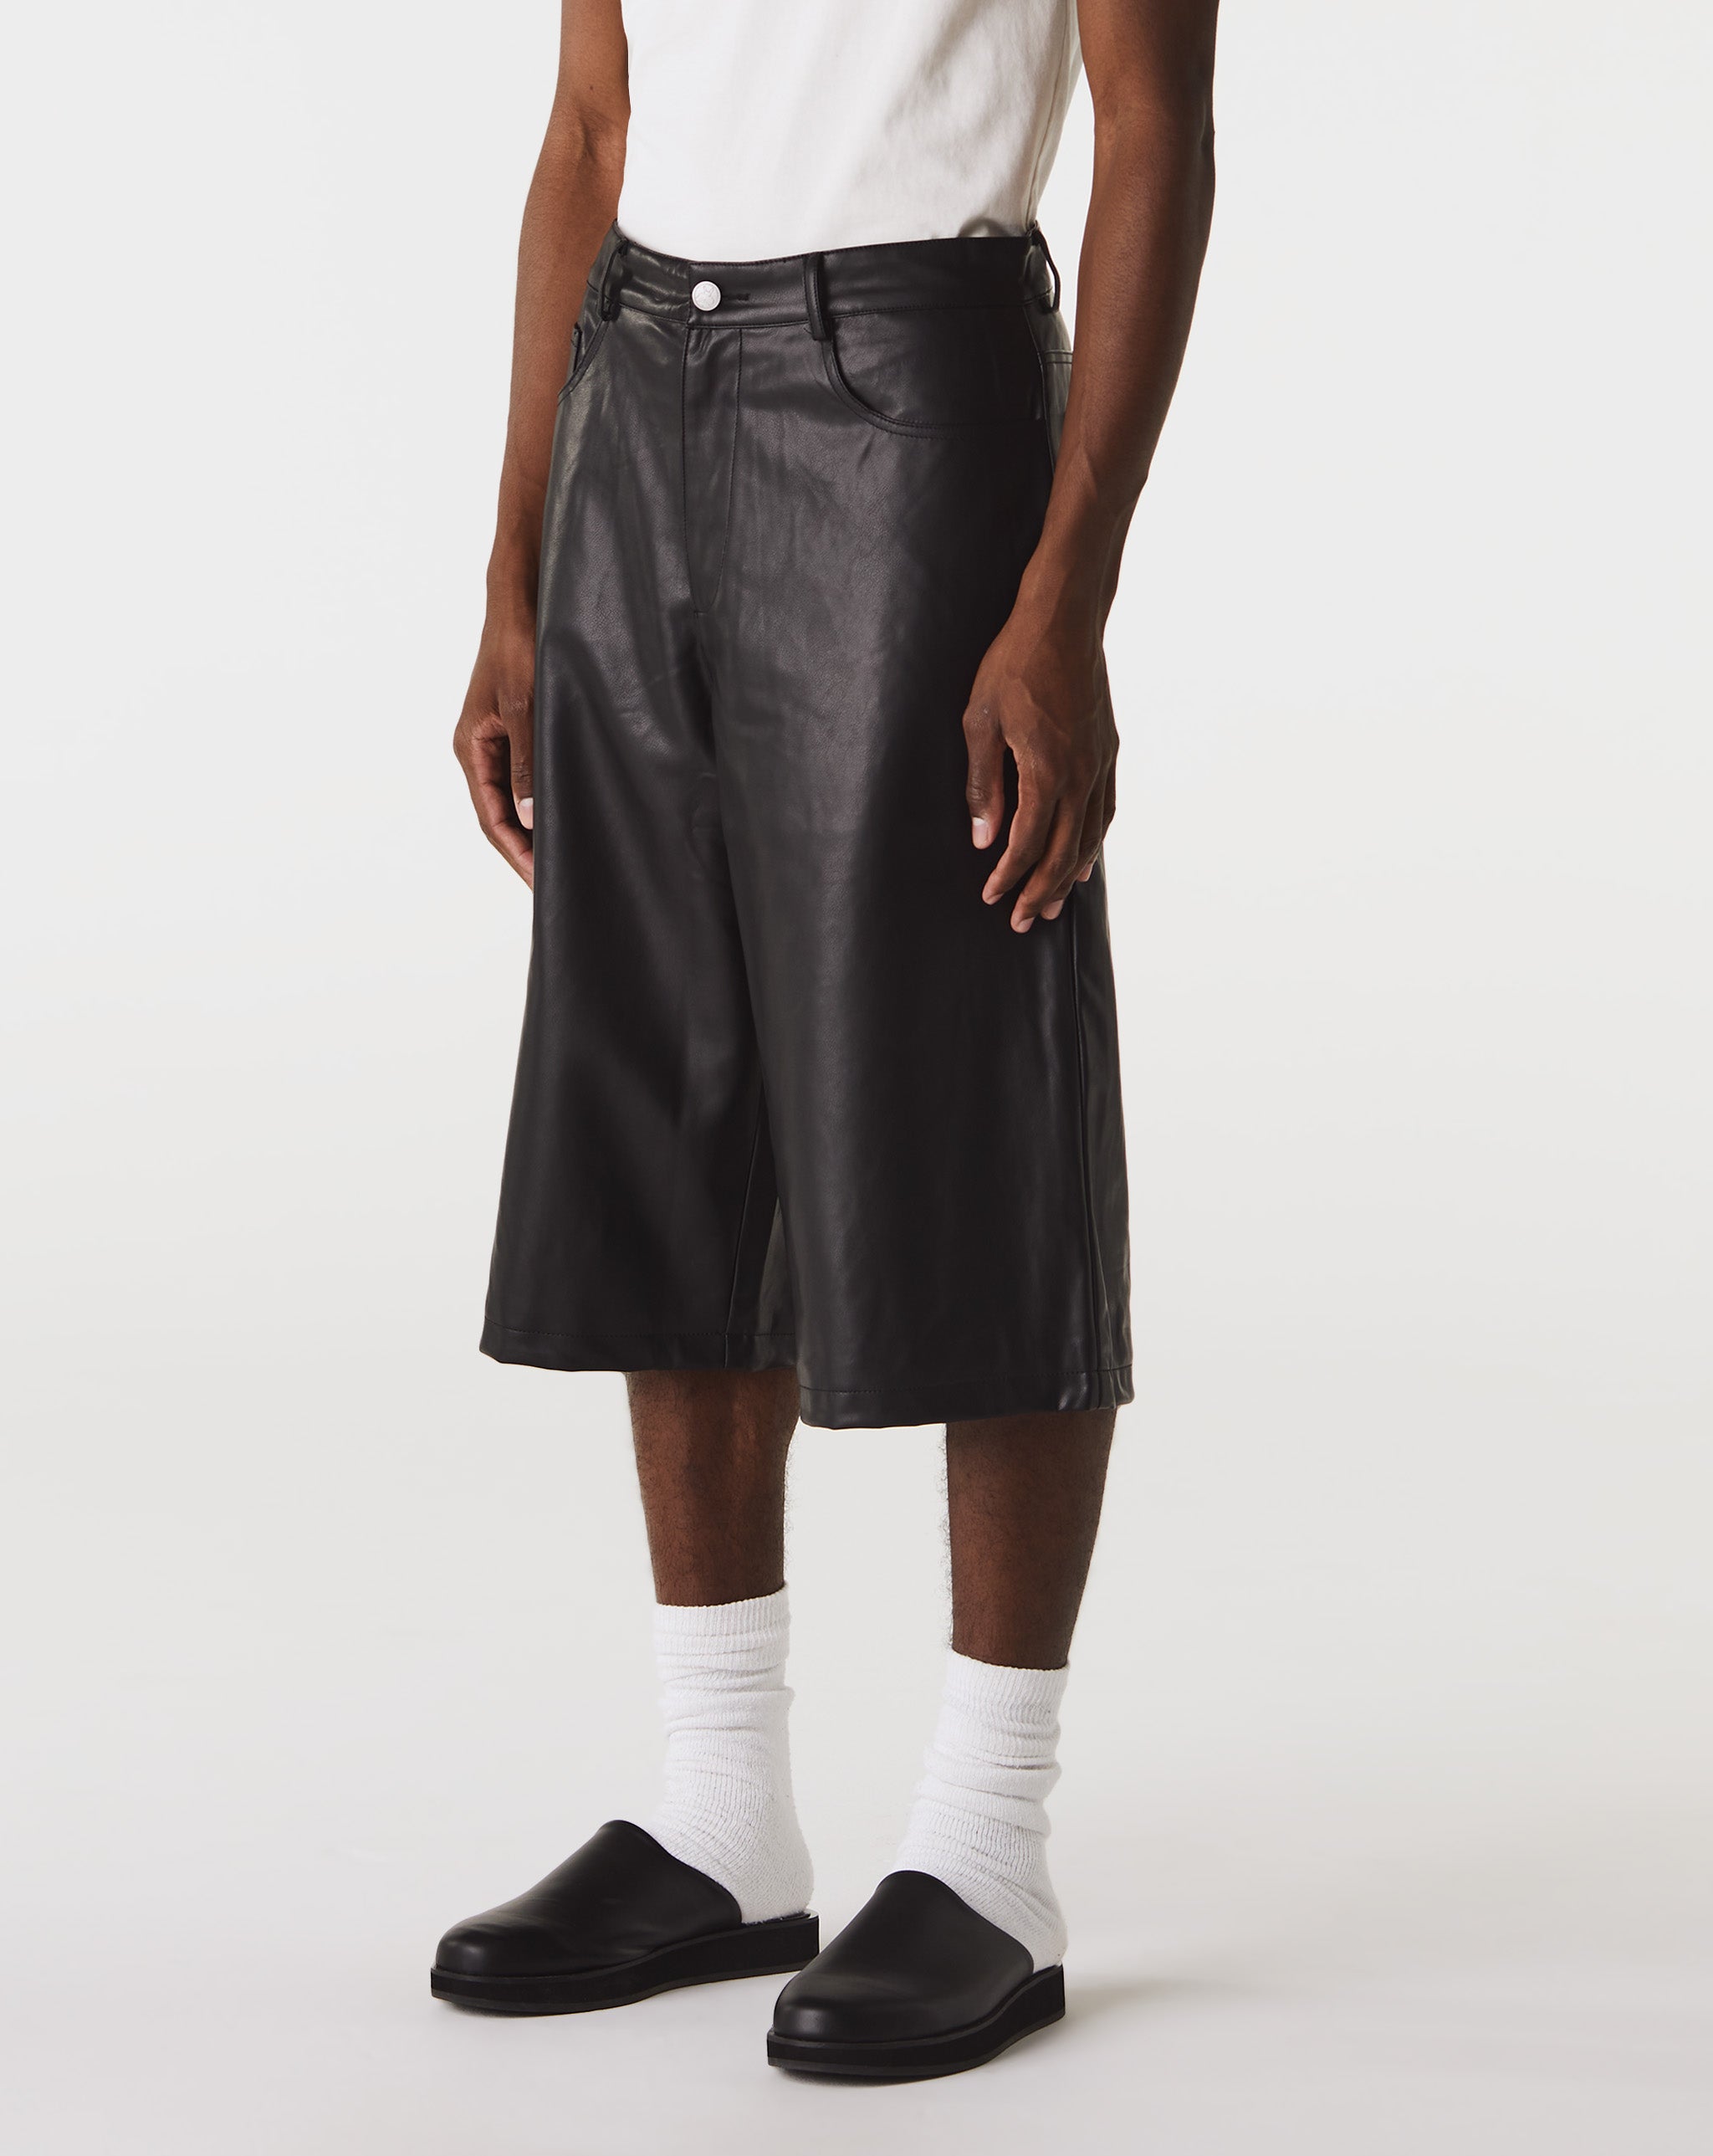 Basketcase Gallery Breacher Leather Shorts  - Cheap Urlfreeze Jordan outlet